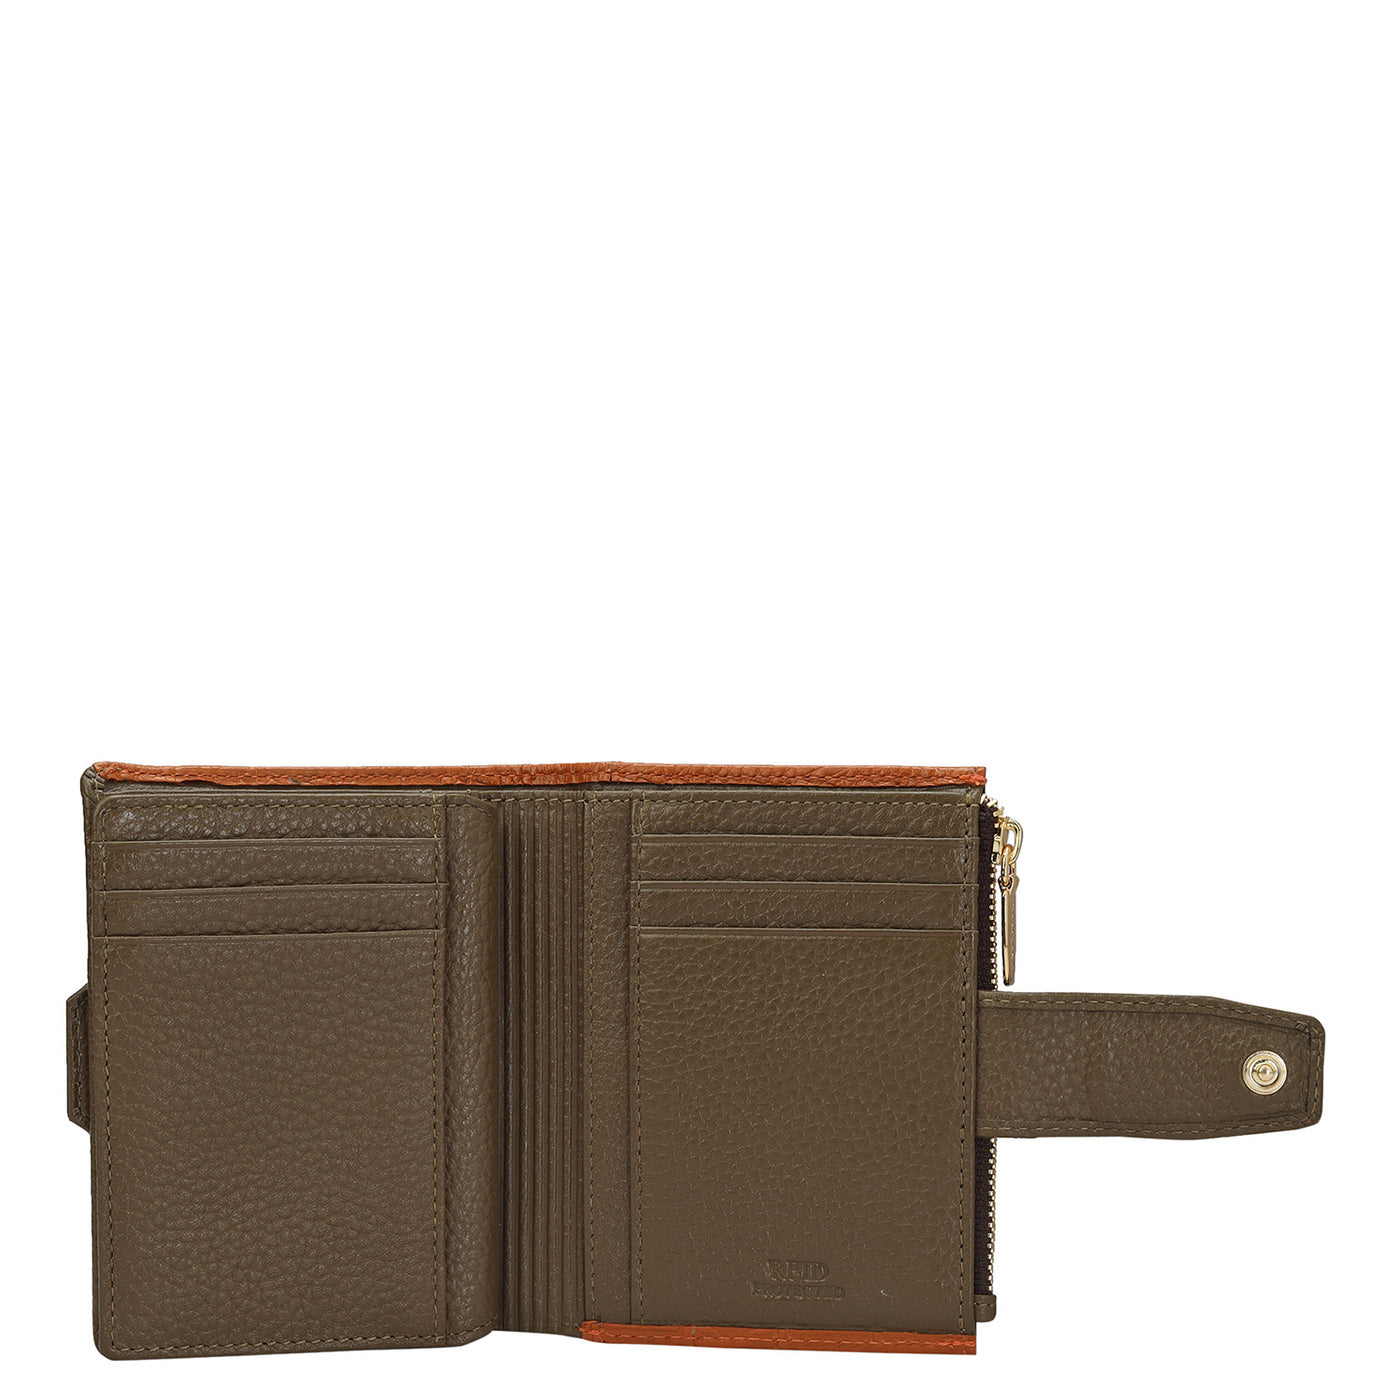 Monogram Leather Ladies Wallet - Orange